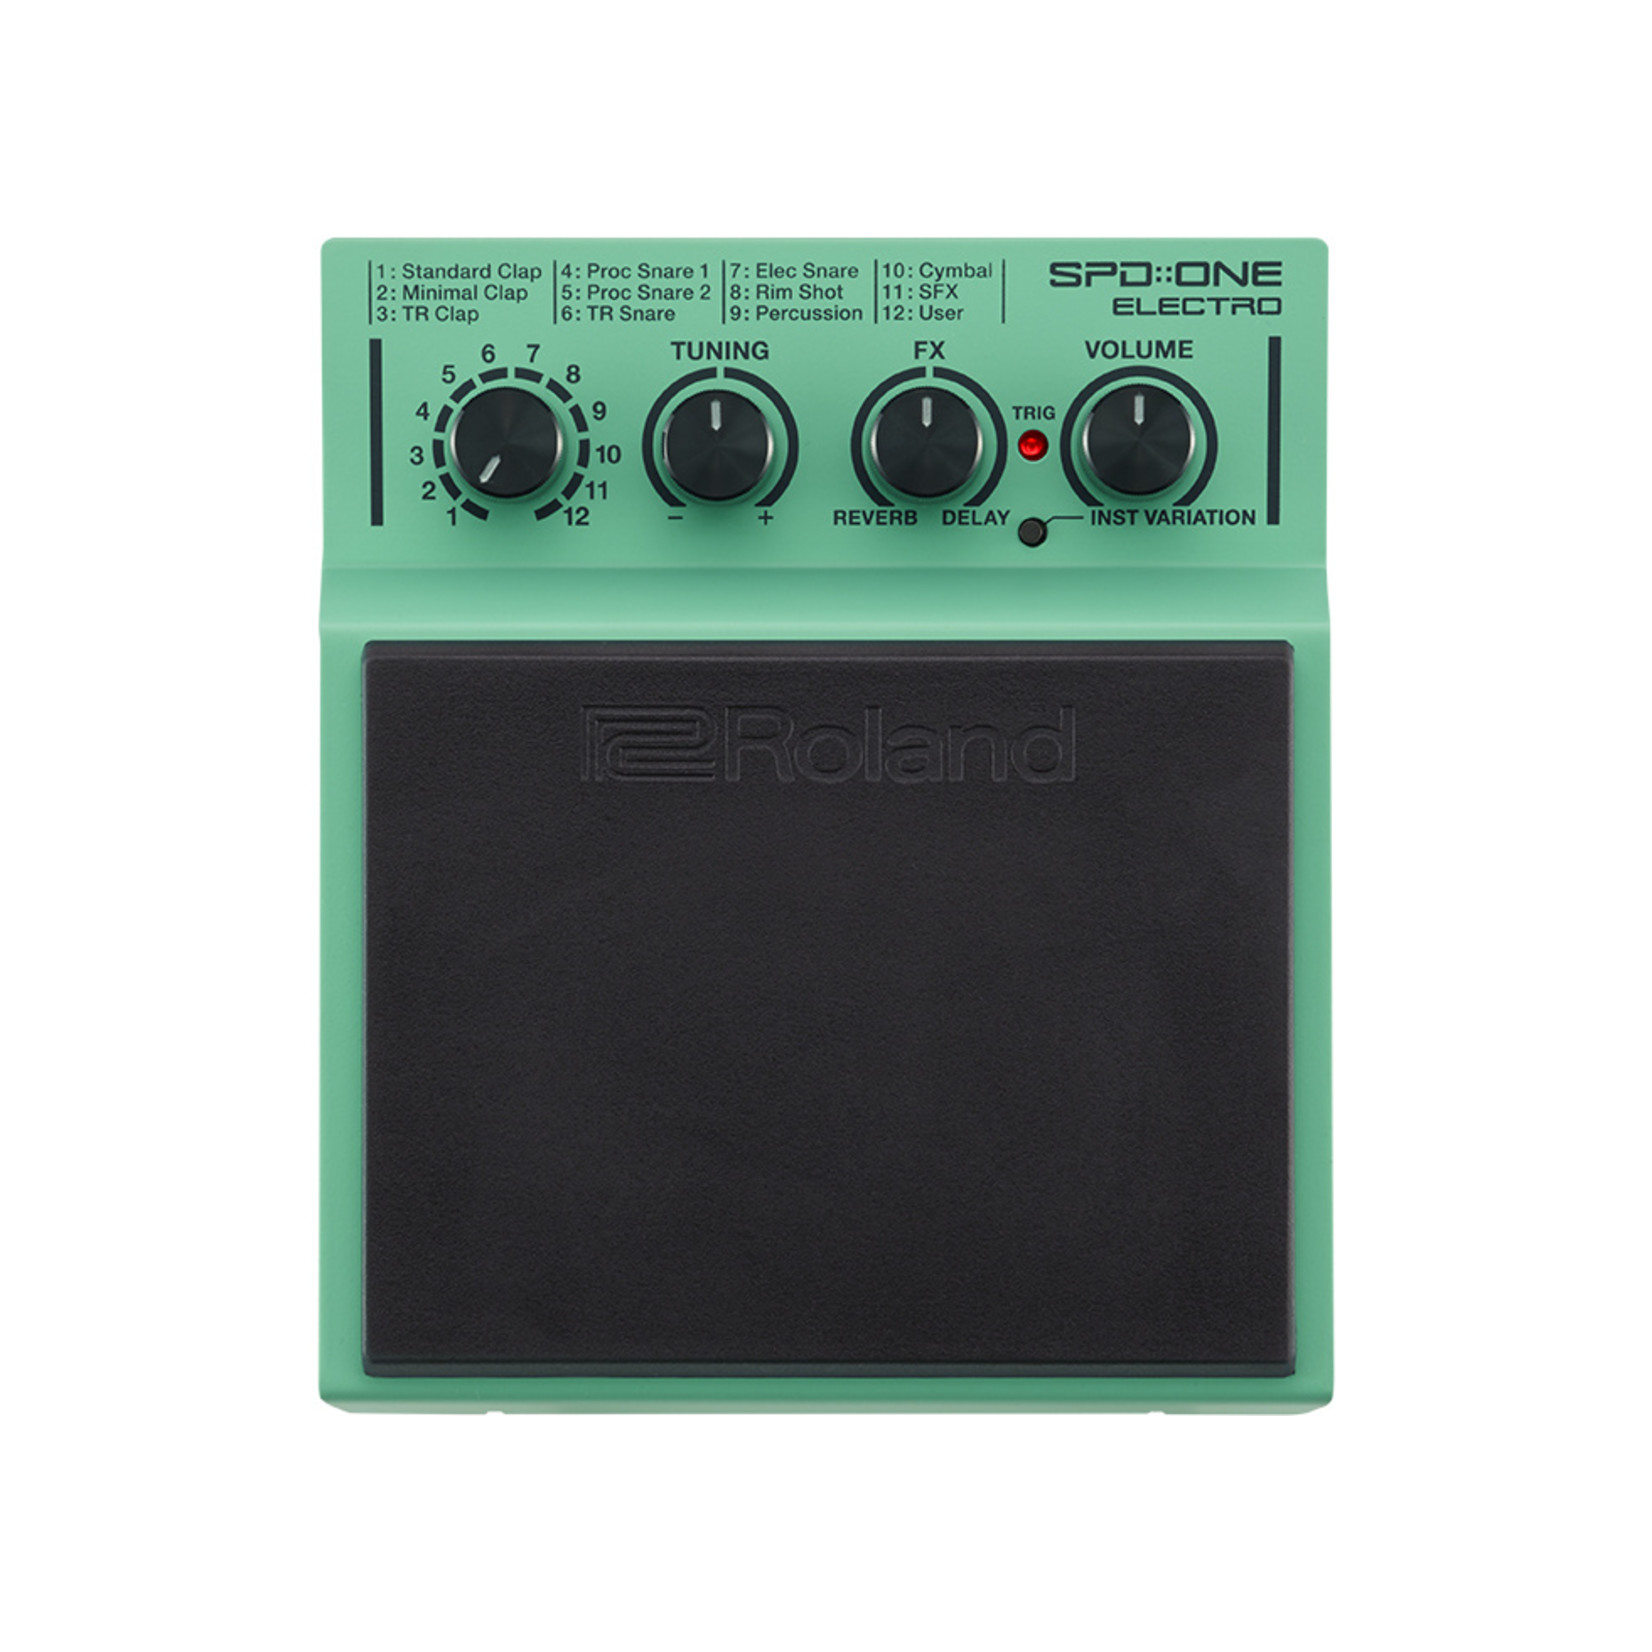 Roland SPD-1 ELECTRO